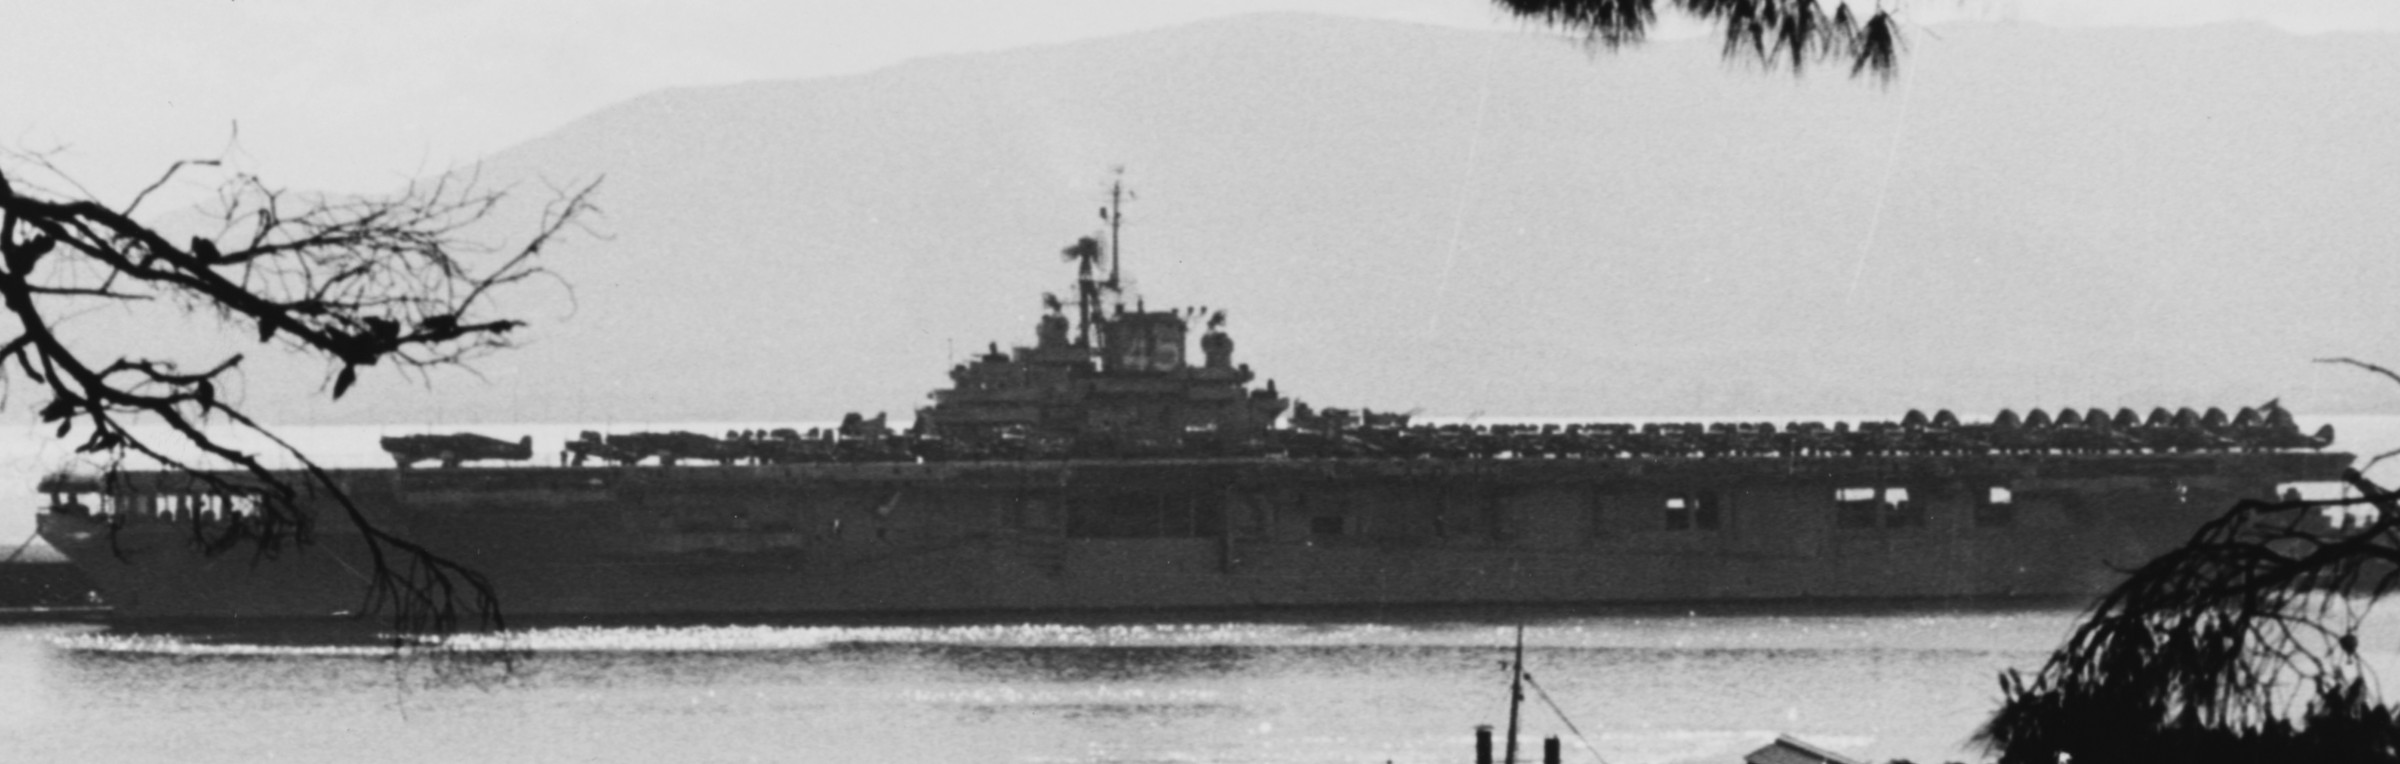 cv-45 uss valley forge essex class aircraft carrier us navy 36